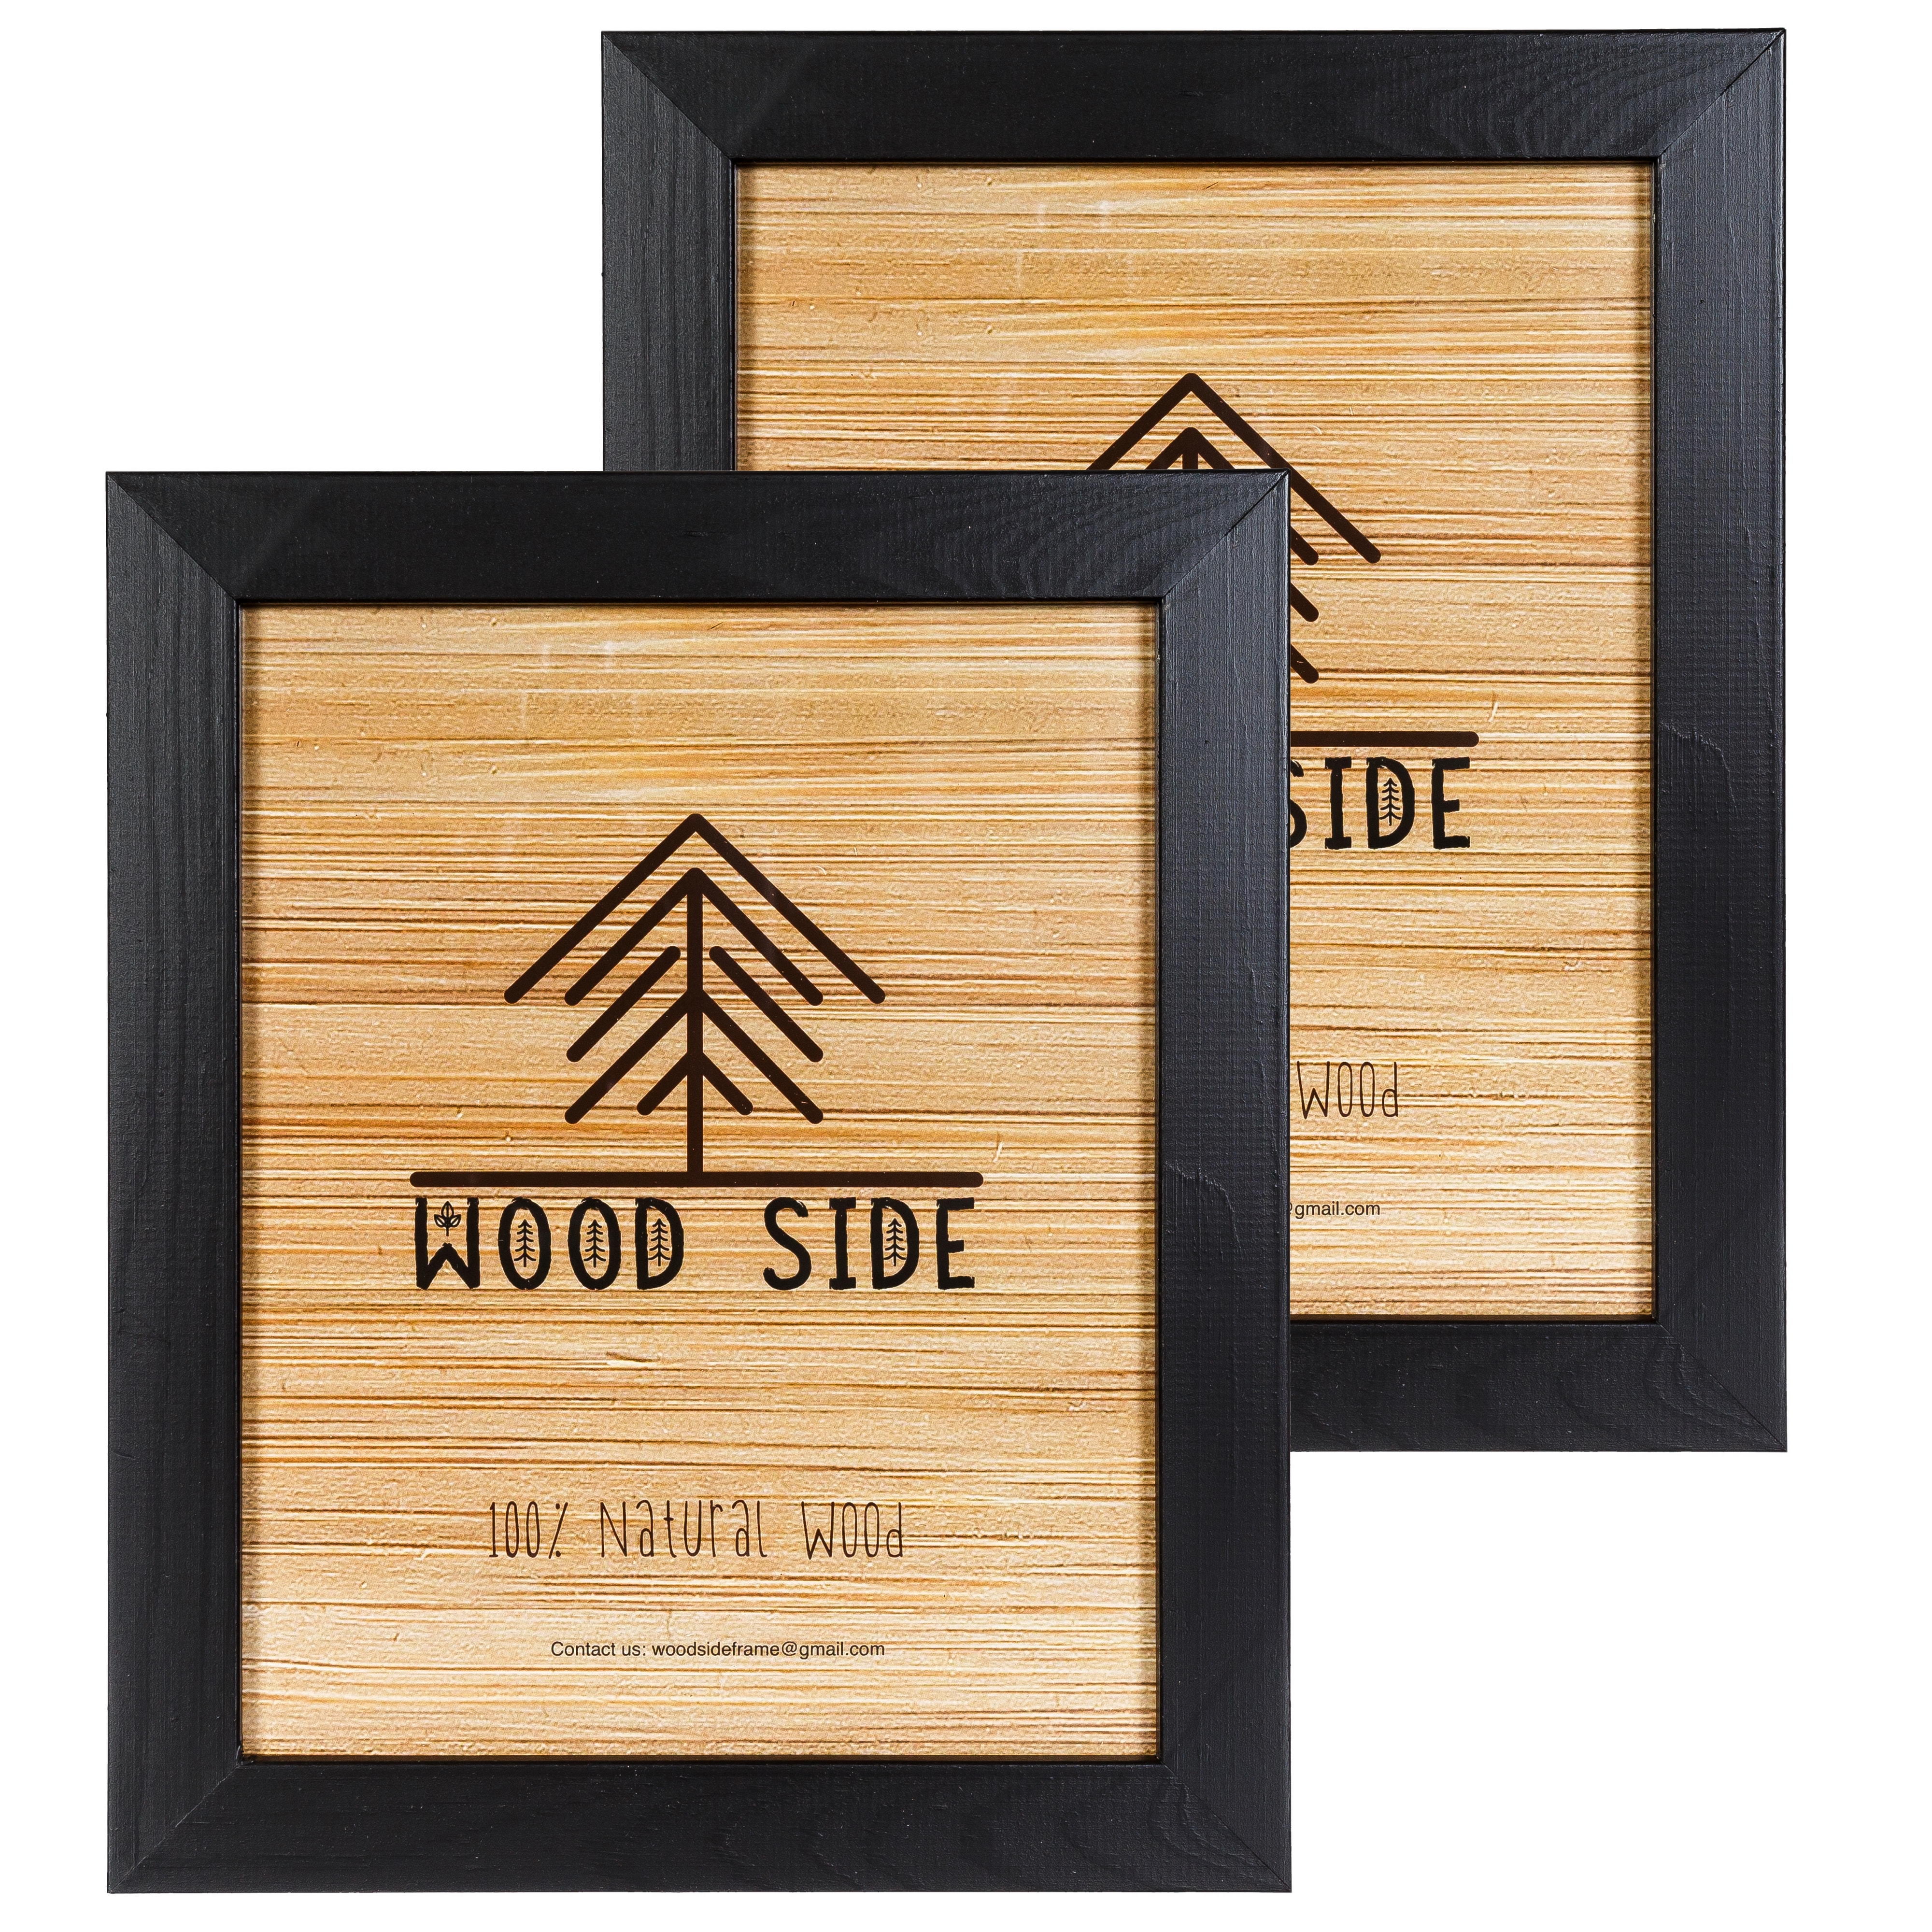 Solid wood Rectangle Wood Display Plaque Display Base Display Stand 5x7